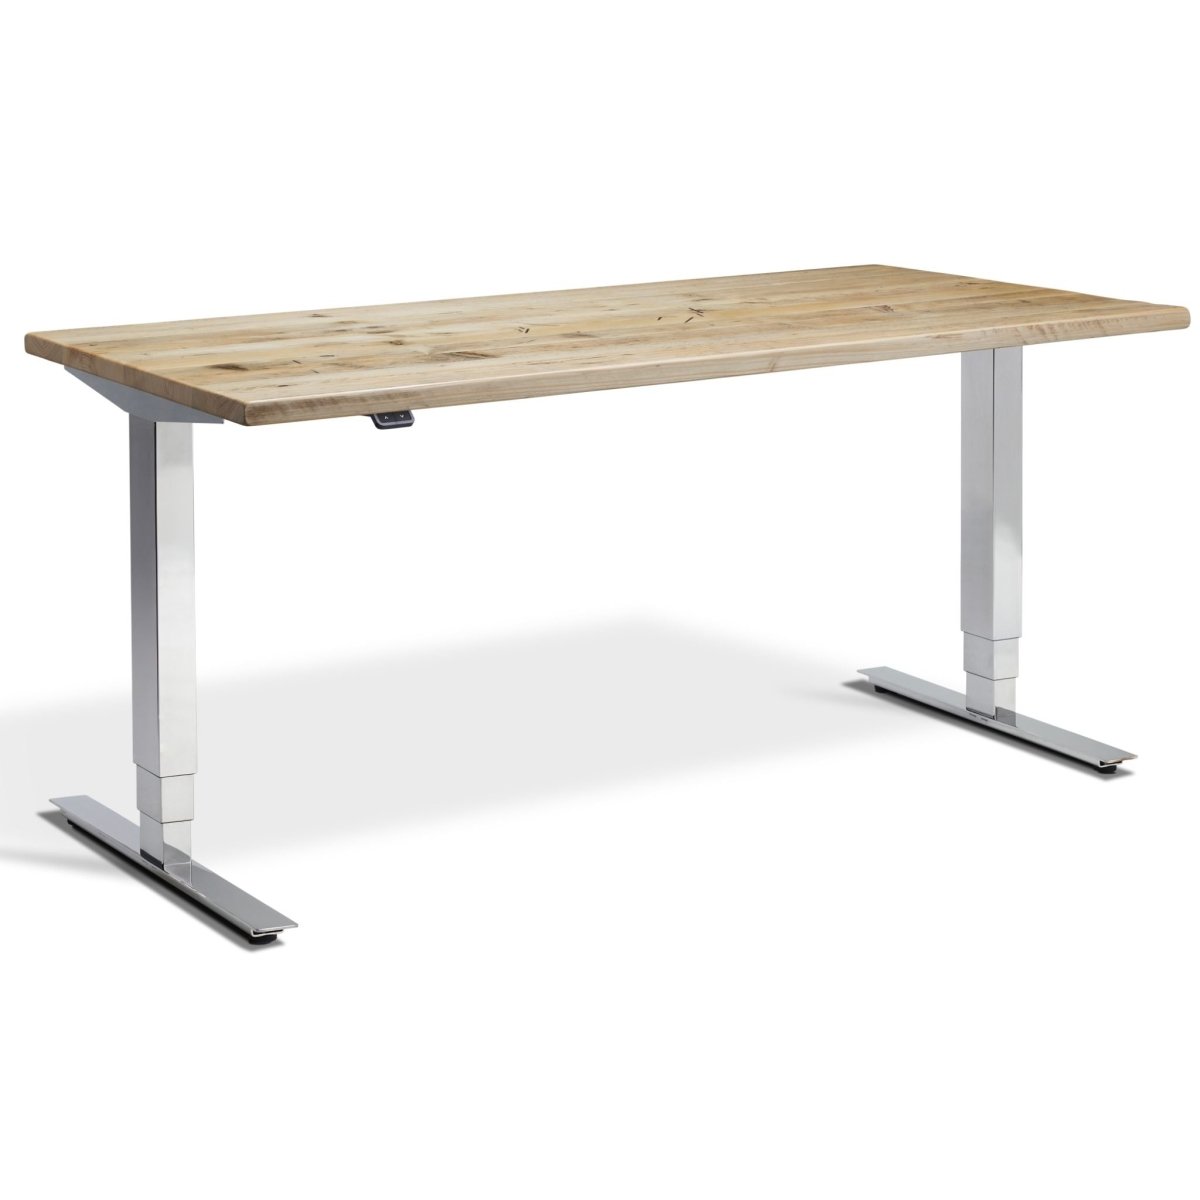 Reclaimed wood standing desk on Kroma polished chrome frame